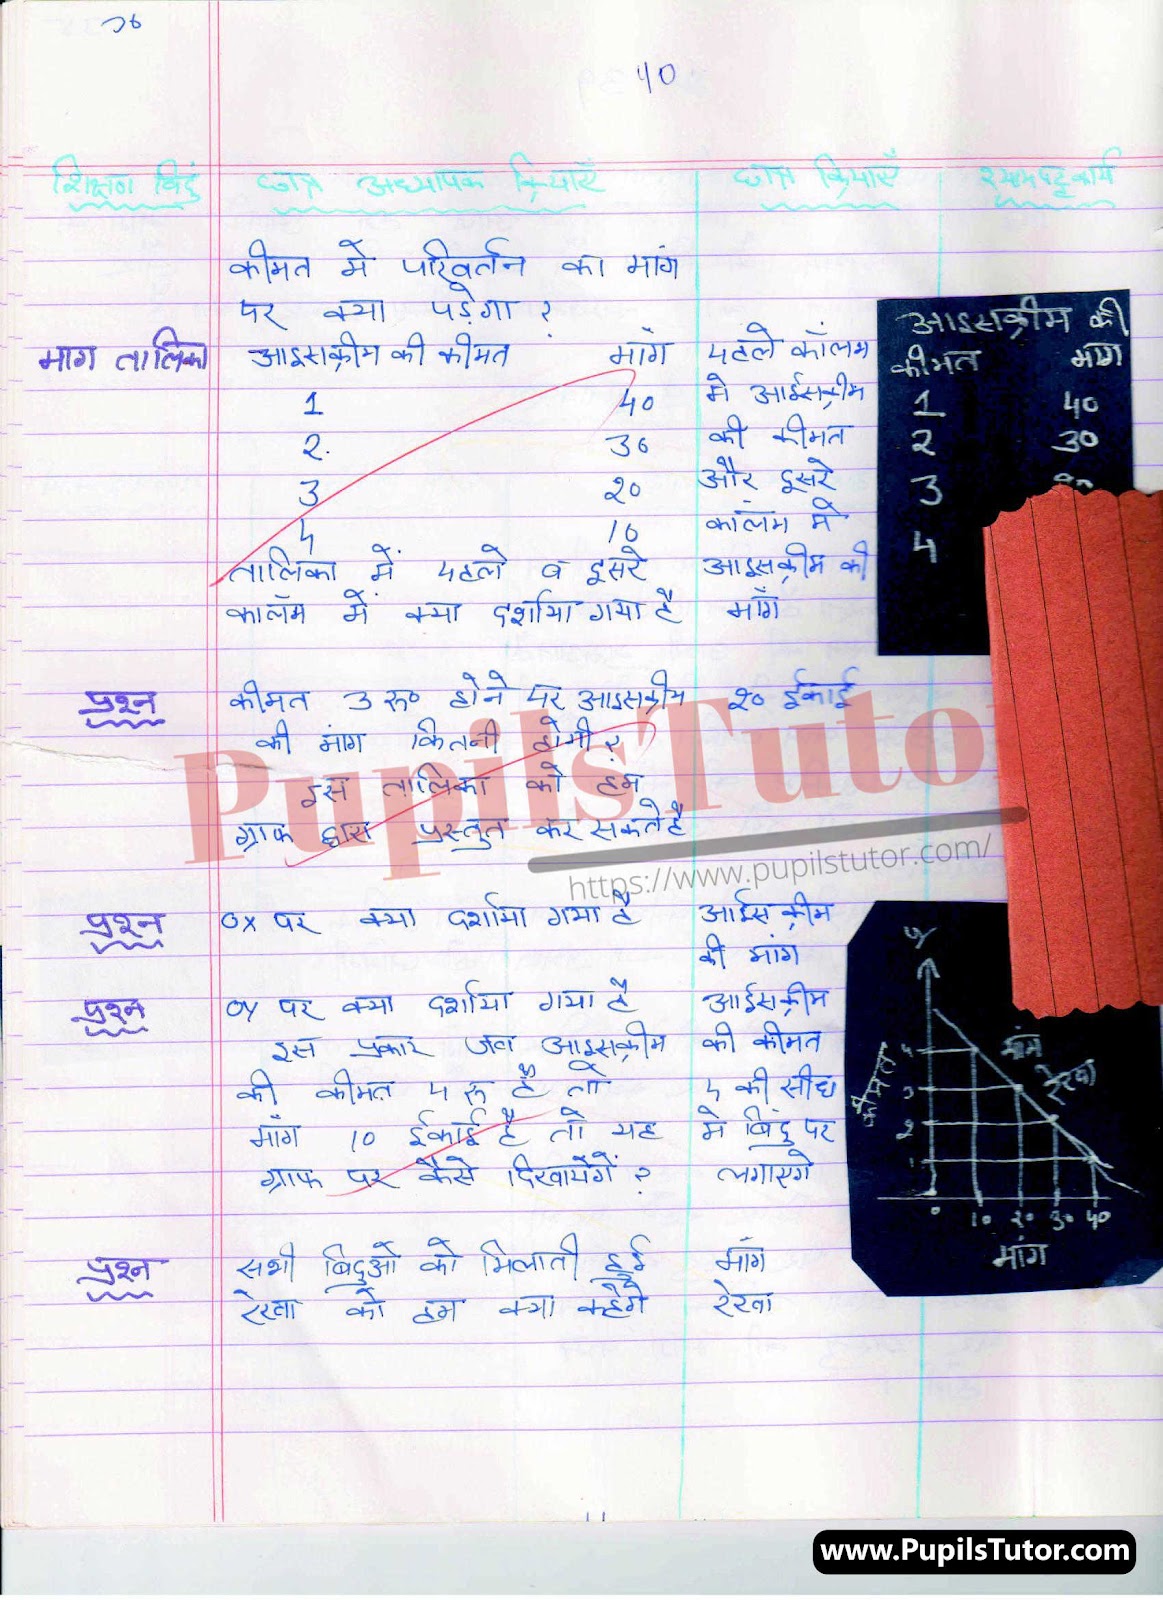 BED, DELED, BTC, BSTC, M.ED, DED And NIOS Teaching Of Economics Innovative Digital Lesson Plan Format In Hindi On Mang Ka Vistar Aur Sankuchan (Expansion And Contraction Of Demand) Topic For Class 4th 5th 6th 7th 8th 9th, 10th, 11th, 12th | माँग का विस्तार और संकुचन टॉपिक पर टीचिंग ऑफ इकोनॉमिक्स का डिजिटल लेसन प्लान फॉर्मेट हिंदी में कक्षा 4 5 वीं 6 वीं 7 वीं 8 वीं 9 वीं, 10 वीं, 11 वीं, 12 वीं के लिए  – [Page And Photo 4] – pupilstutor.com